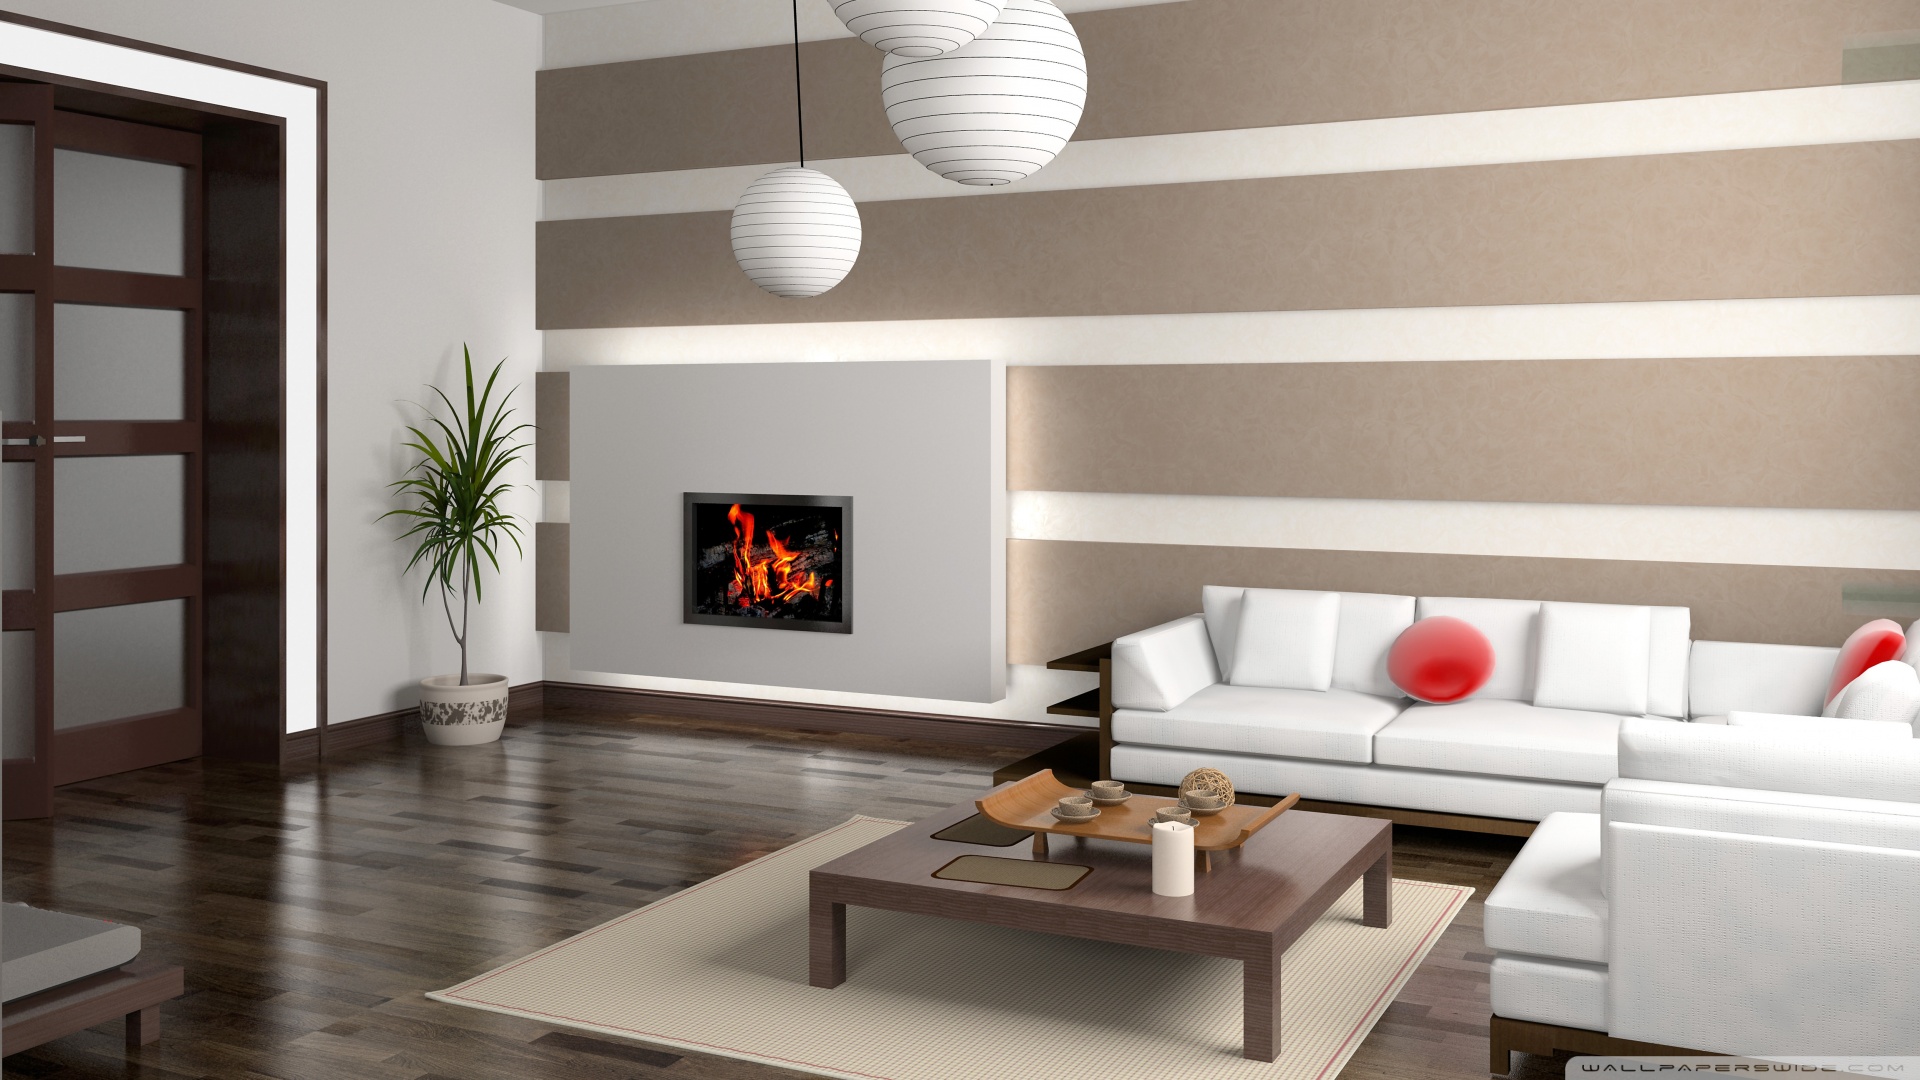 wallpaper decorating ideas living room,living room,room,furniture,interior design,table